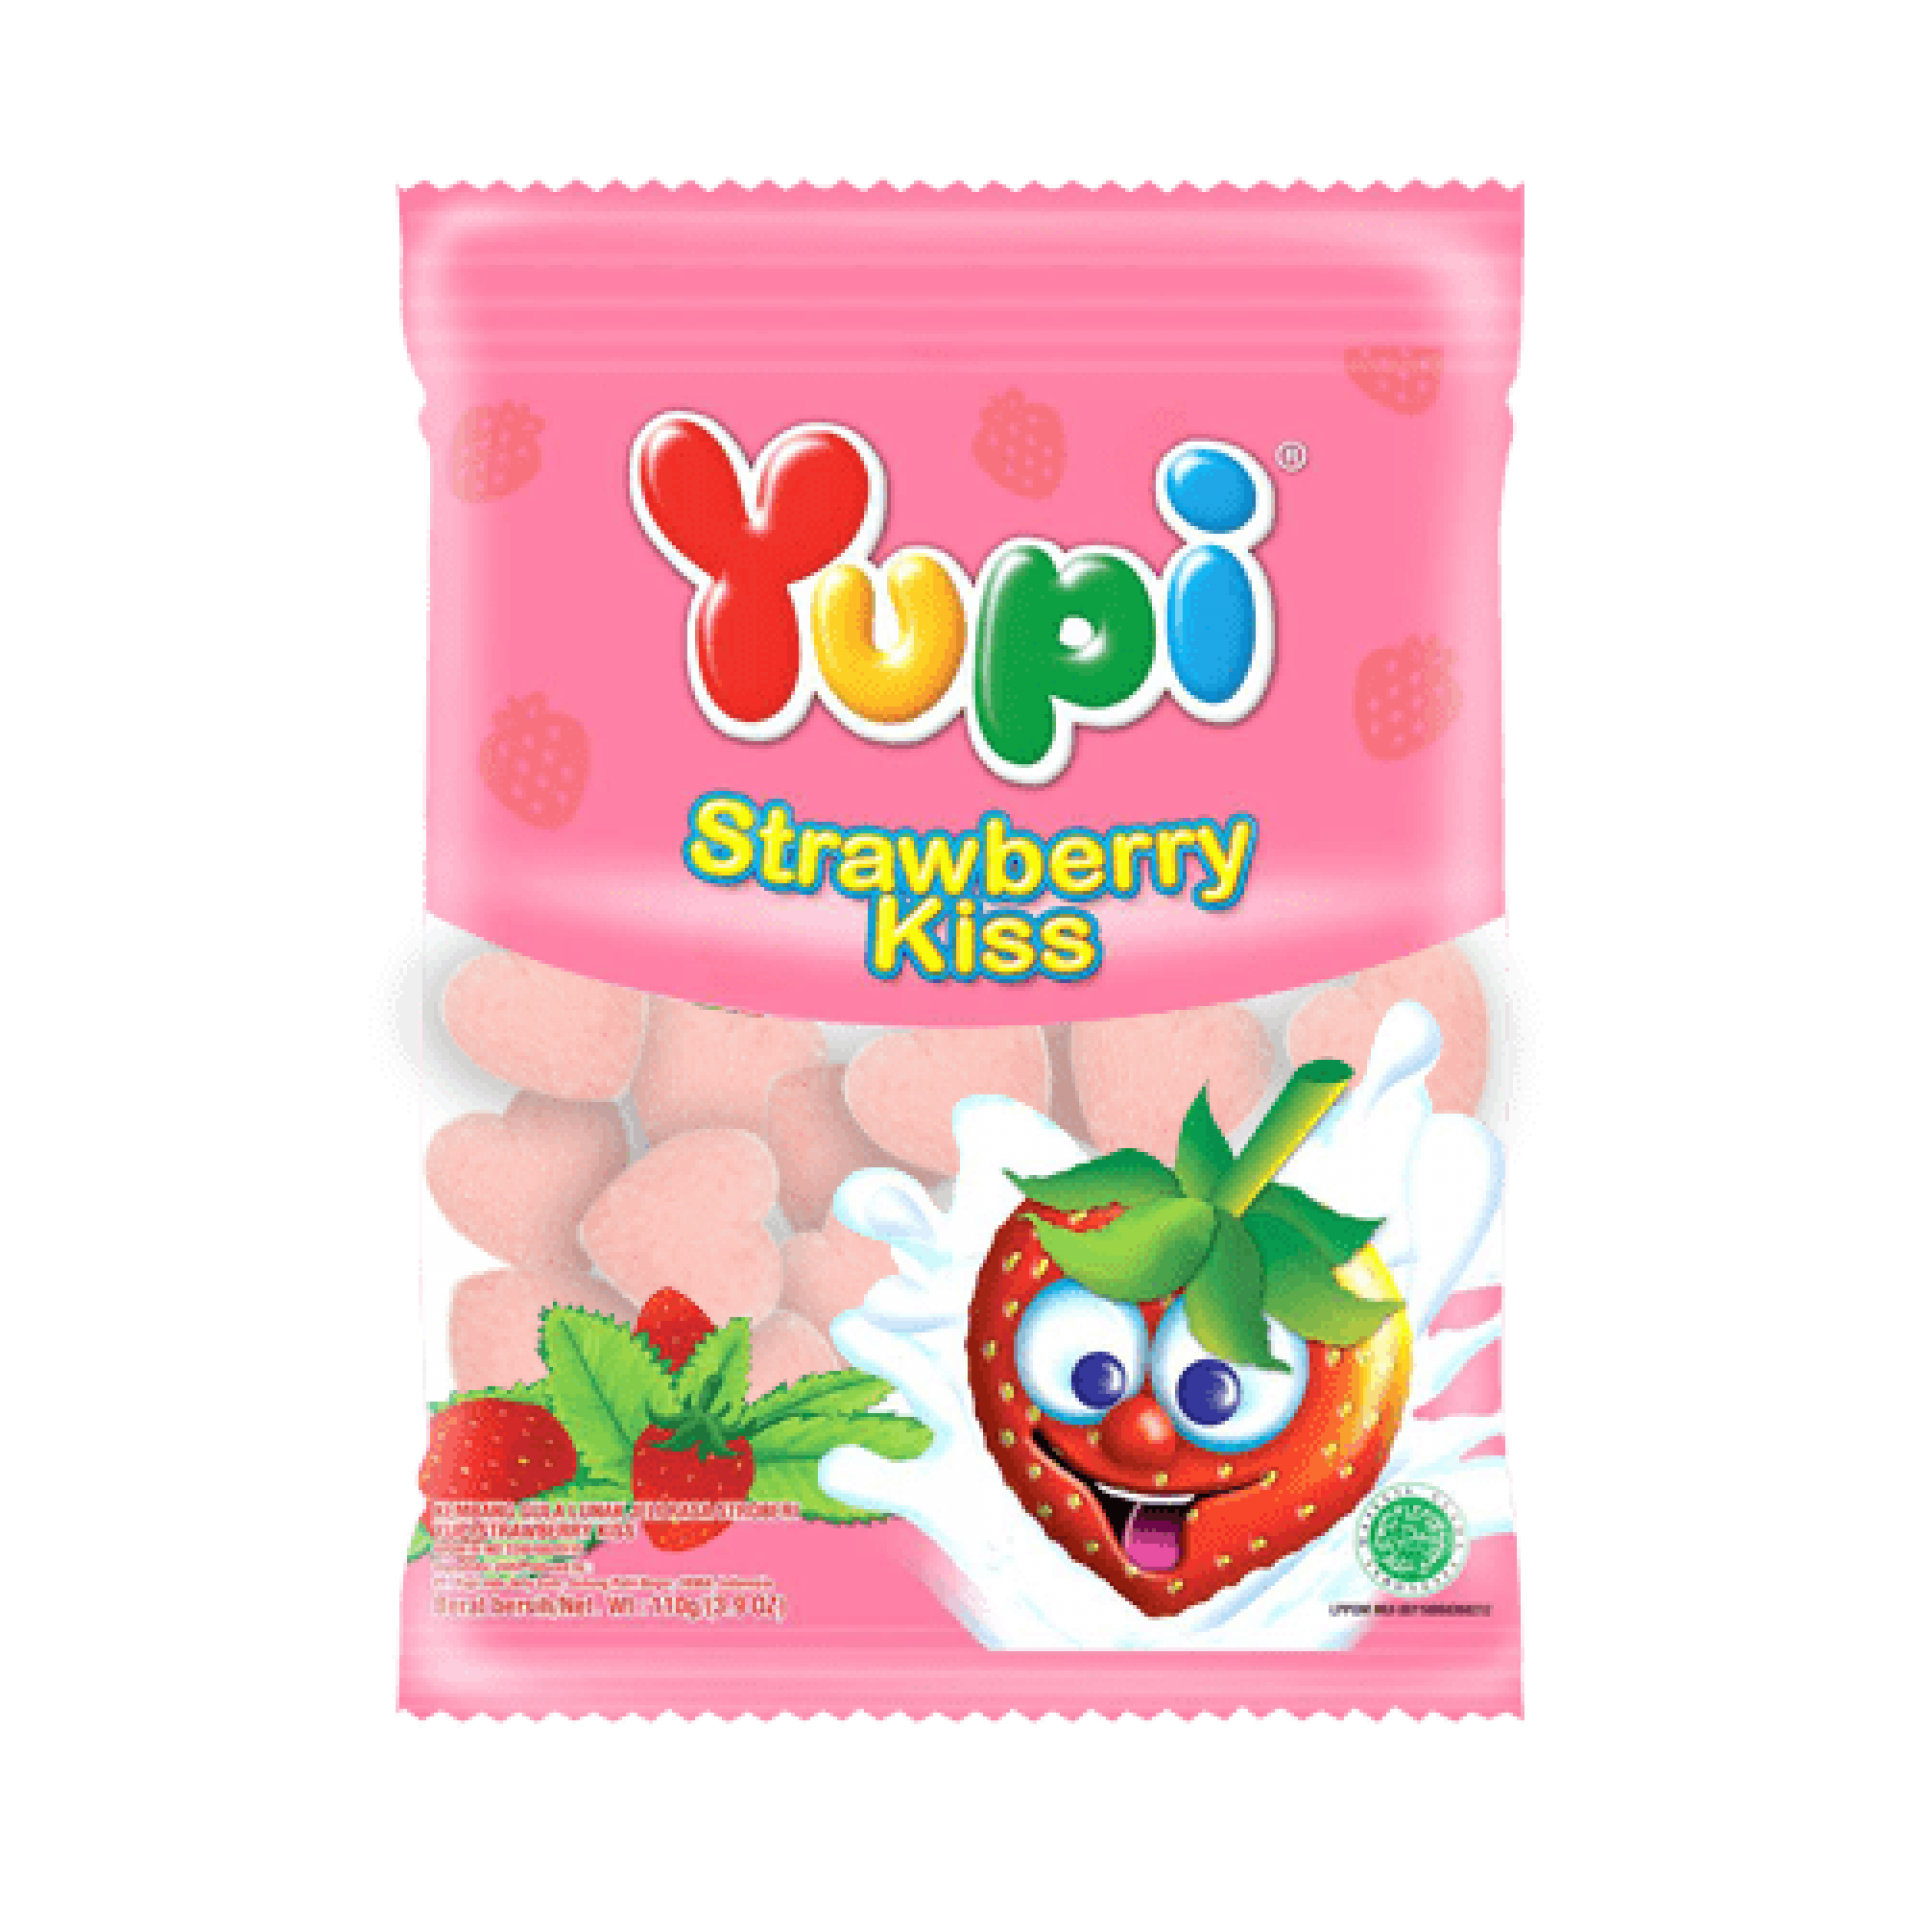 yupi buah berry strawberry kiss